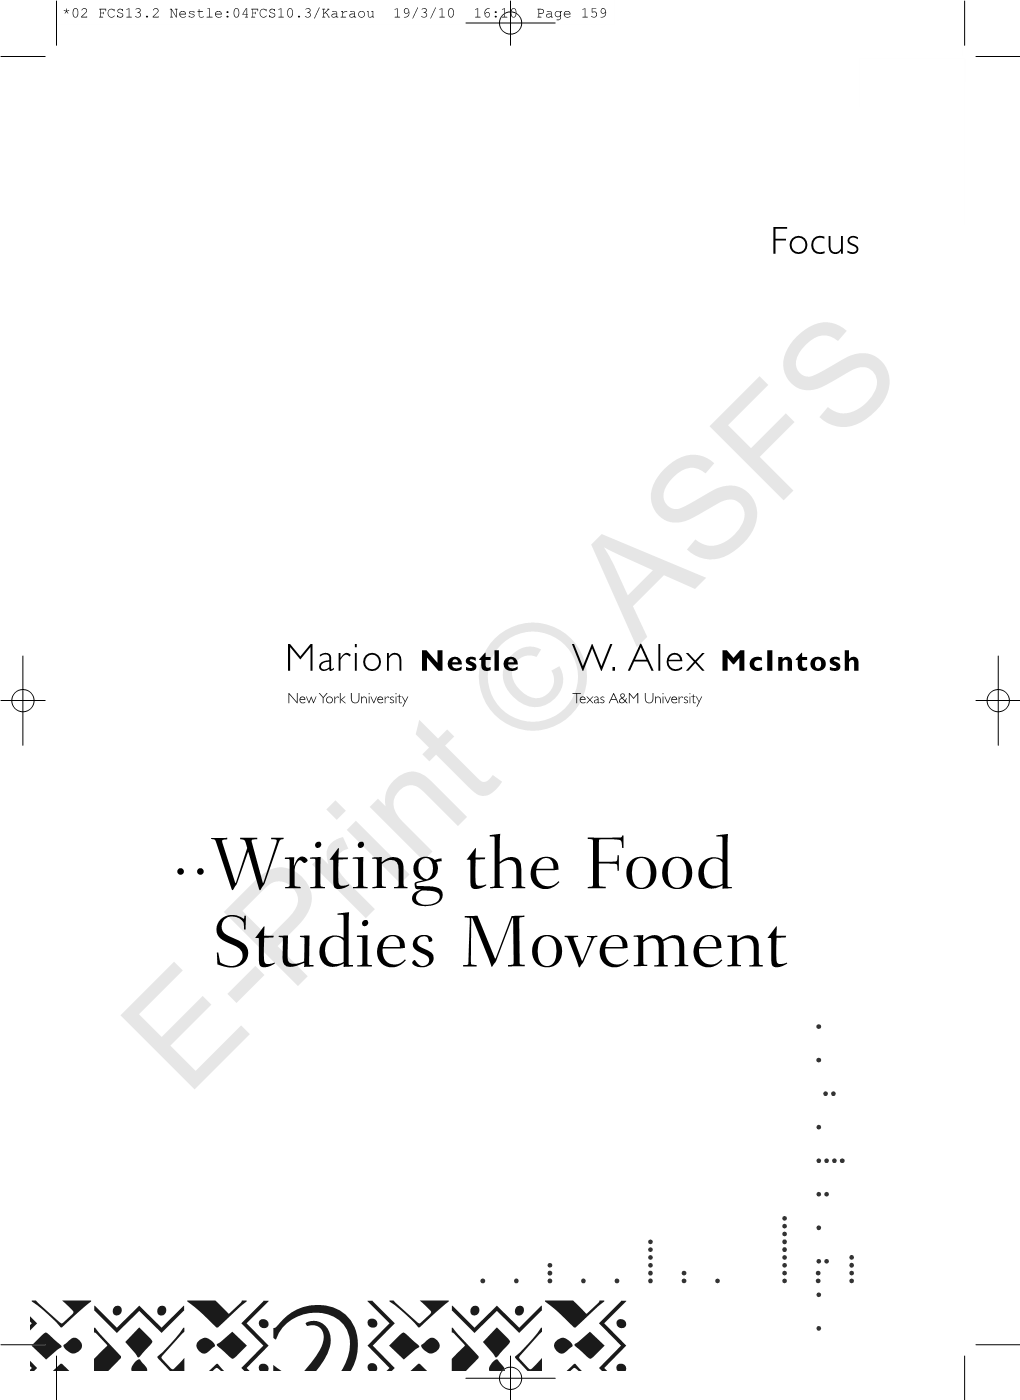 Writing the Food Studies Movement